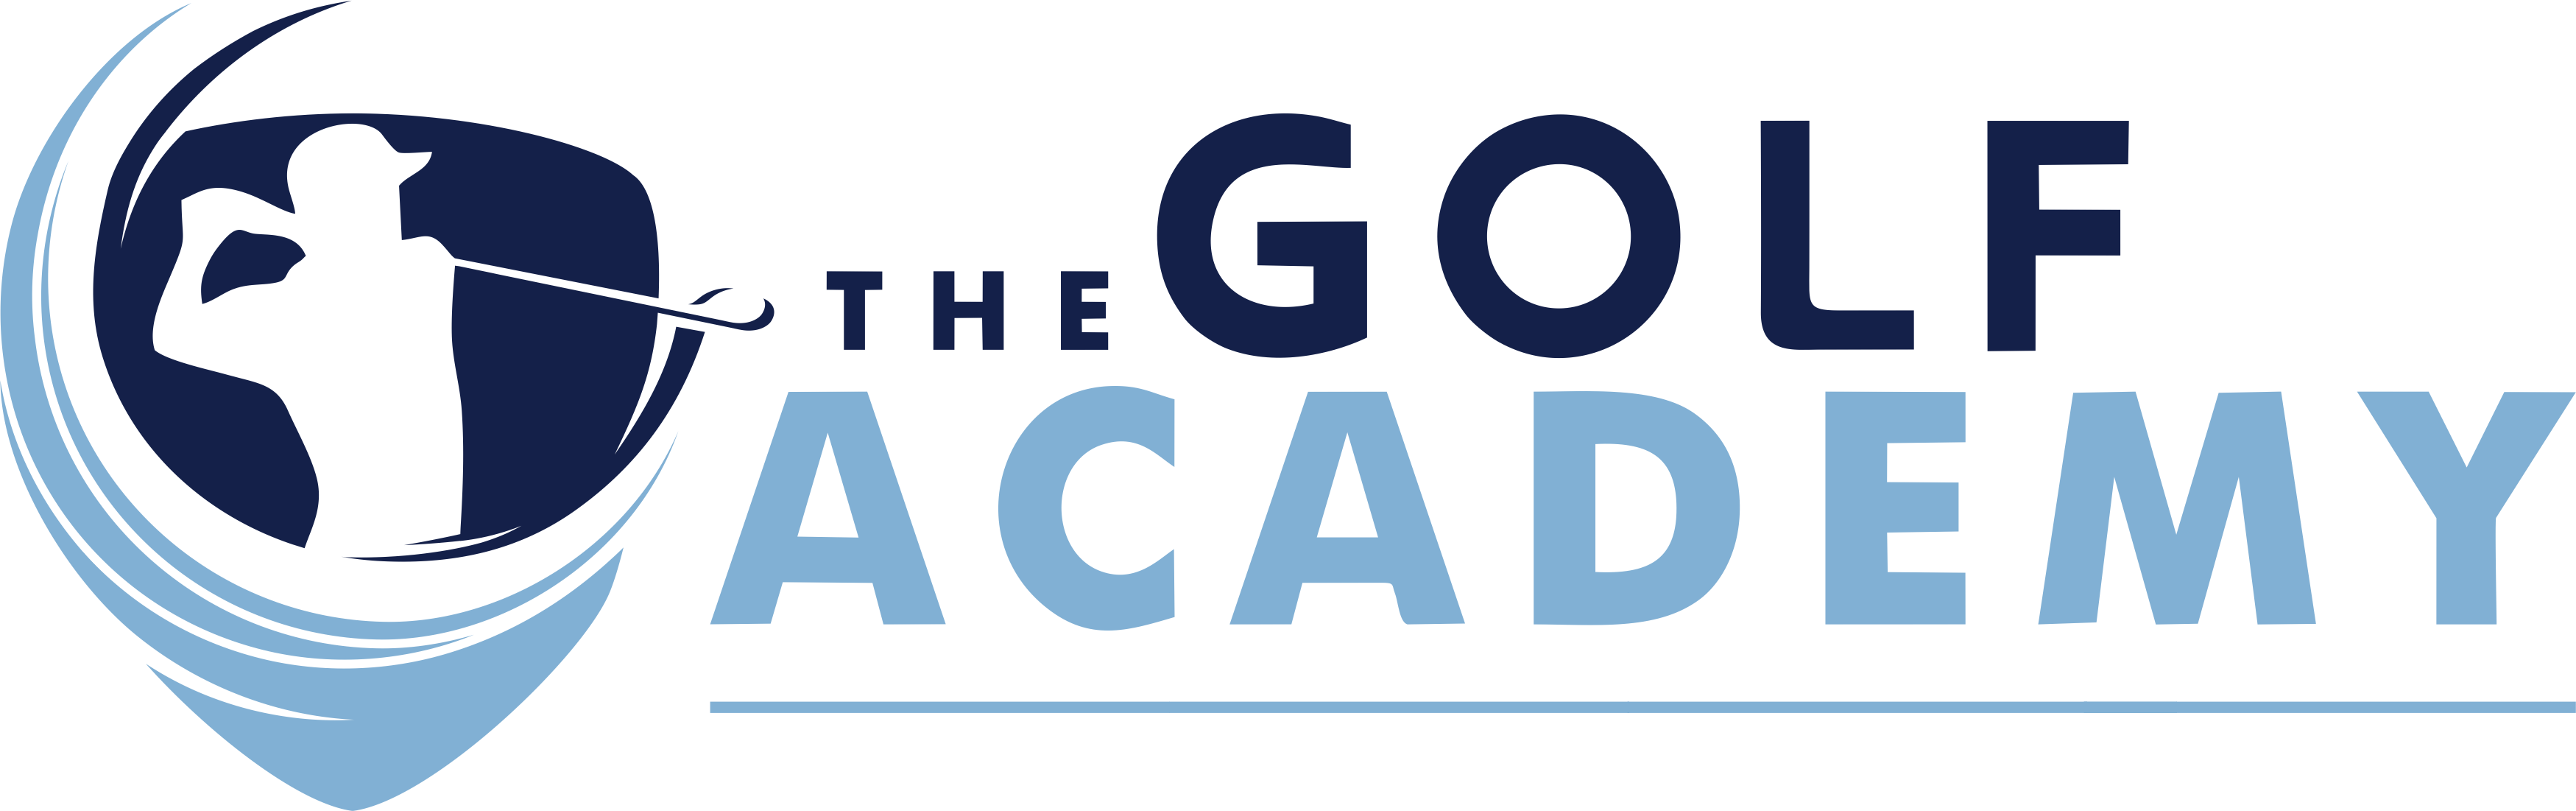 III. Top Golf Academies Around the World